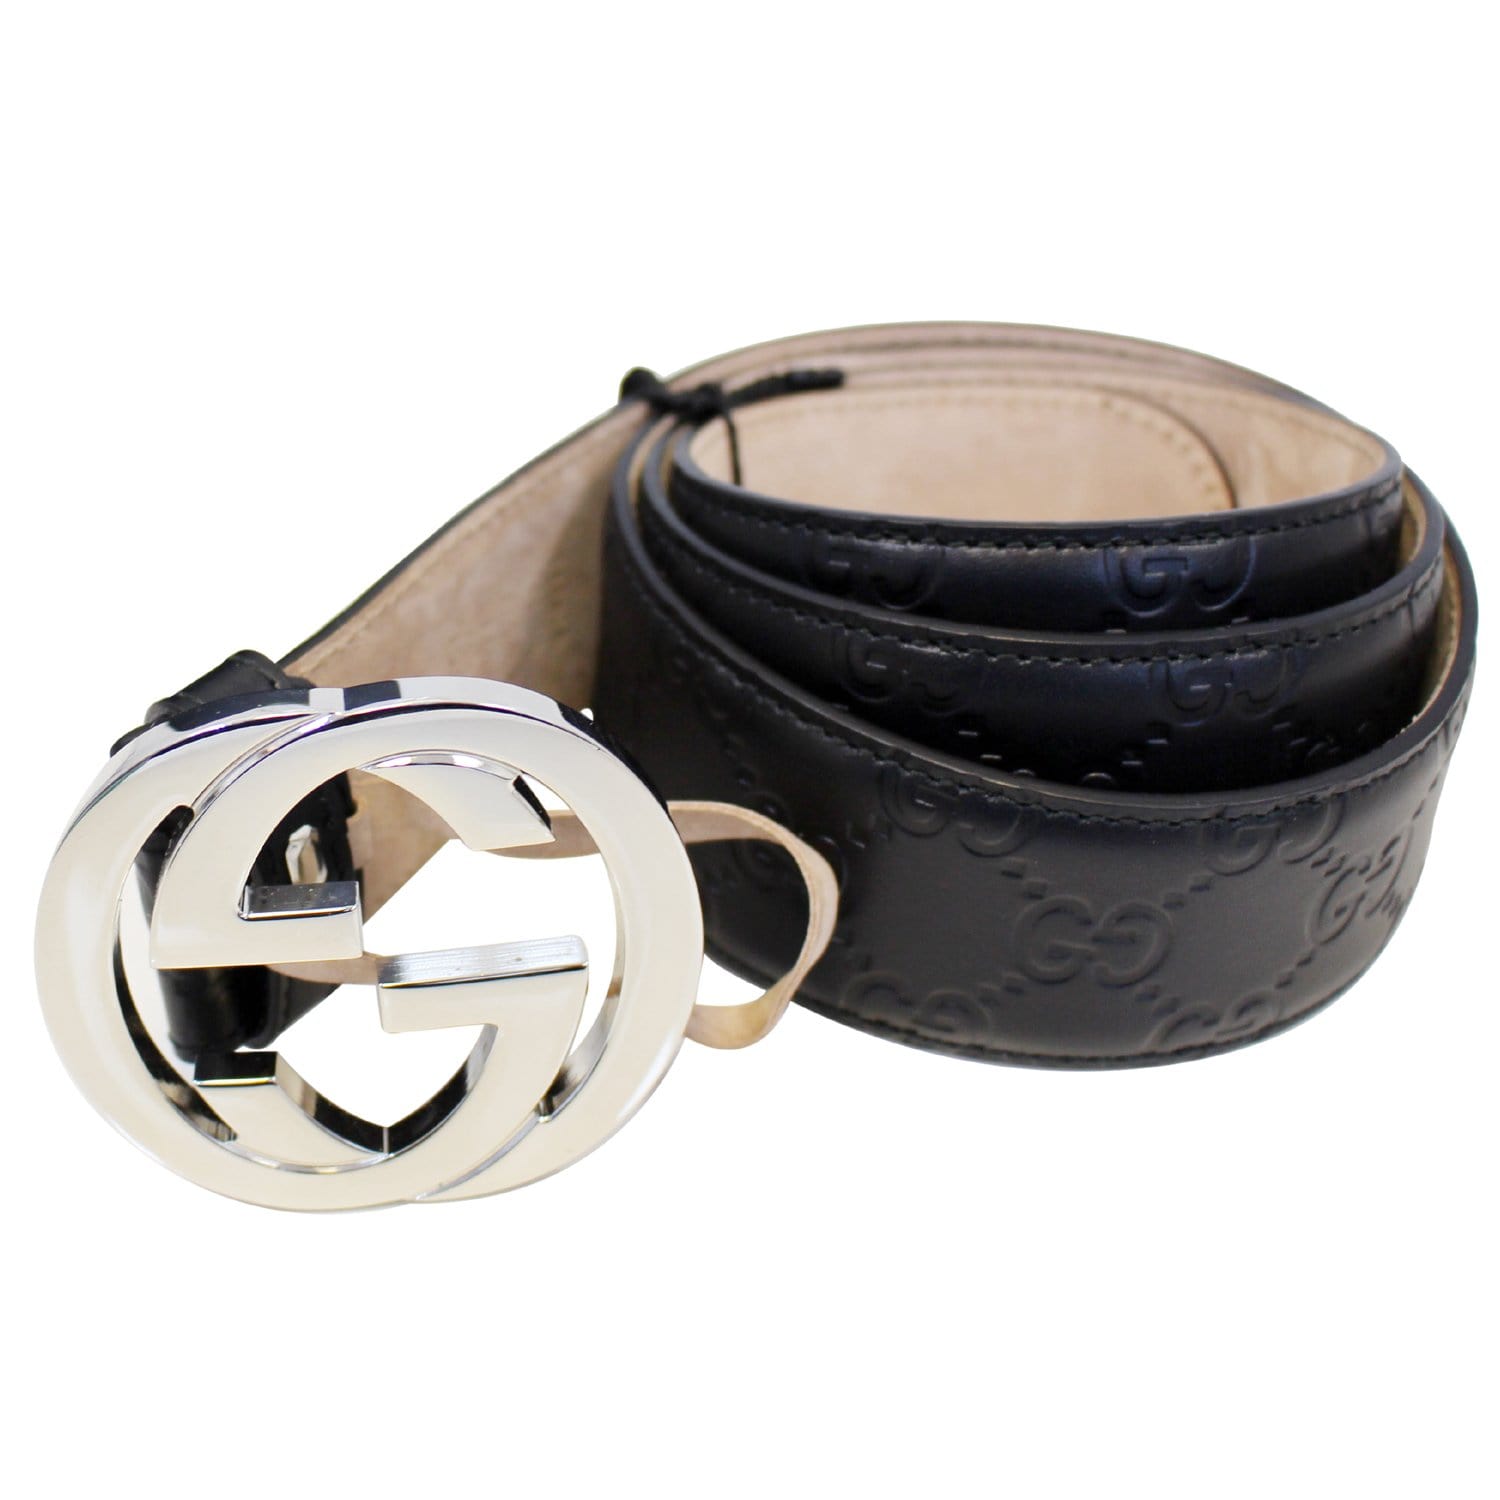 Signature leather belt